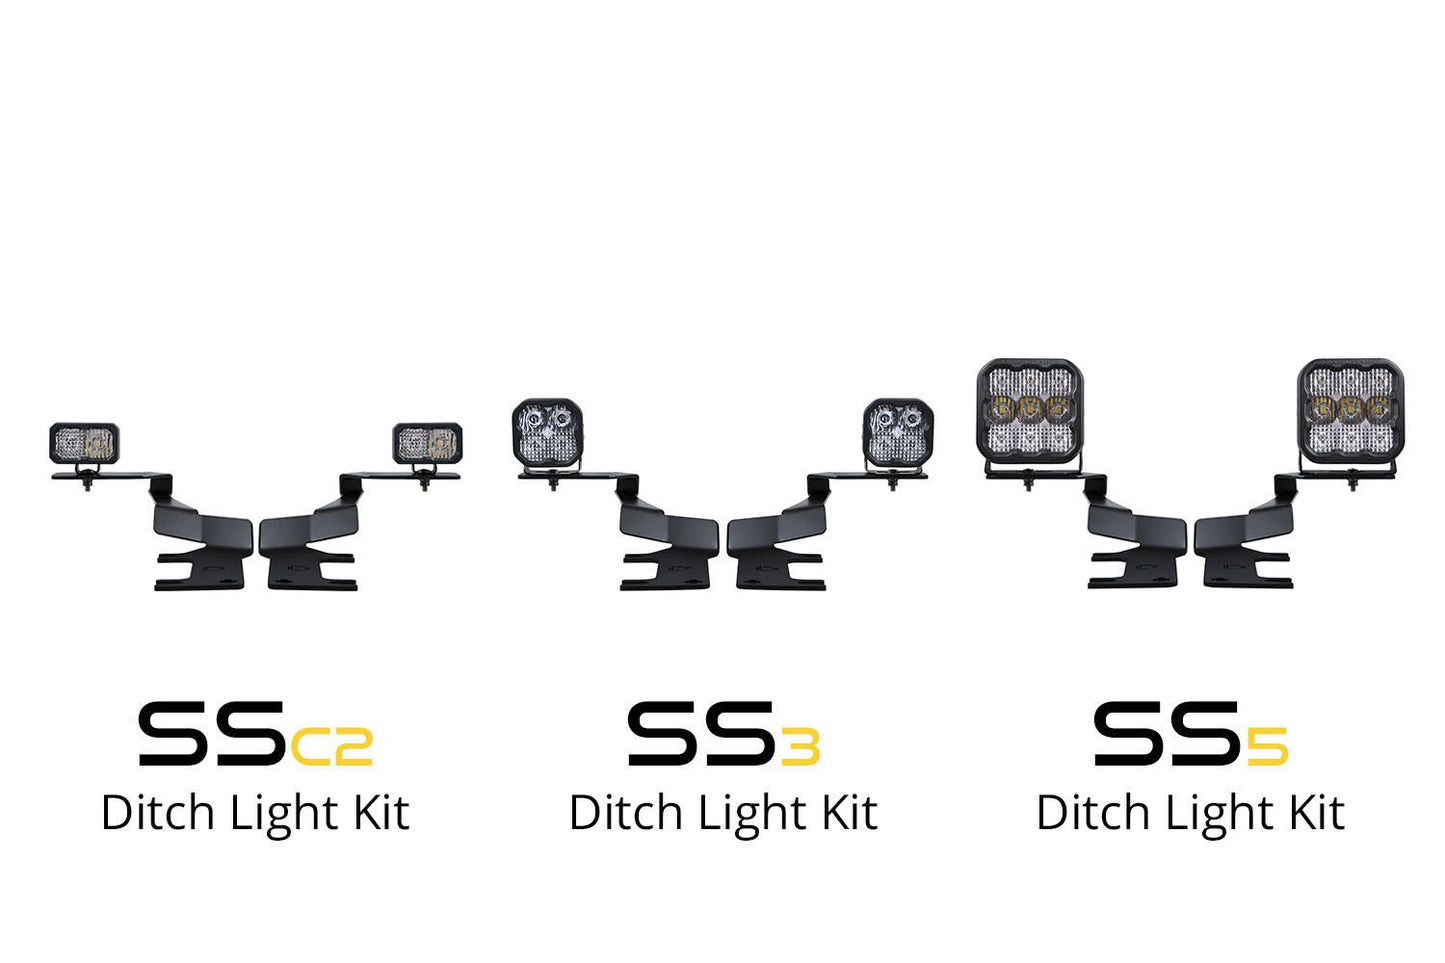 Diode Dynamics LED Ditch Light Kit: 2017-2022 Ford F250/F350 Super Duty